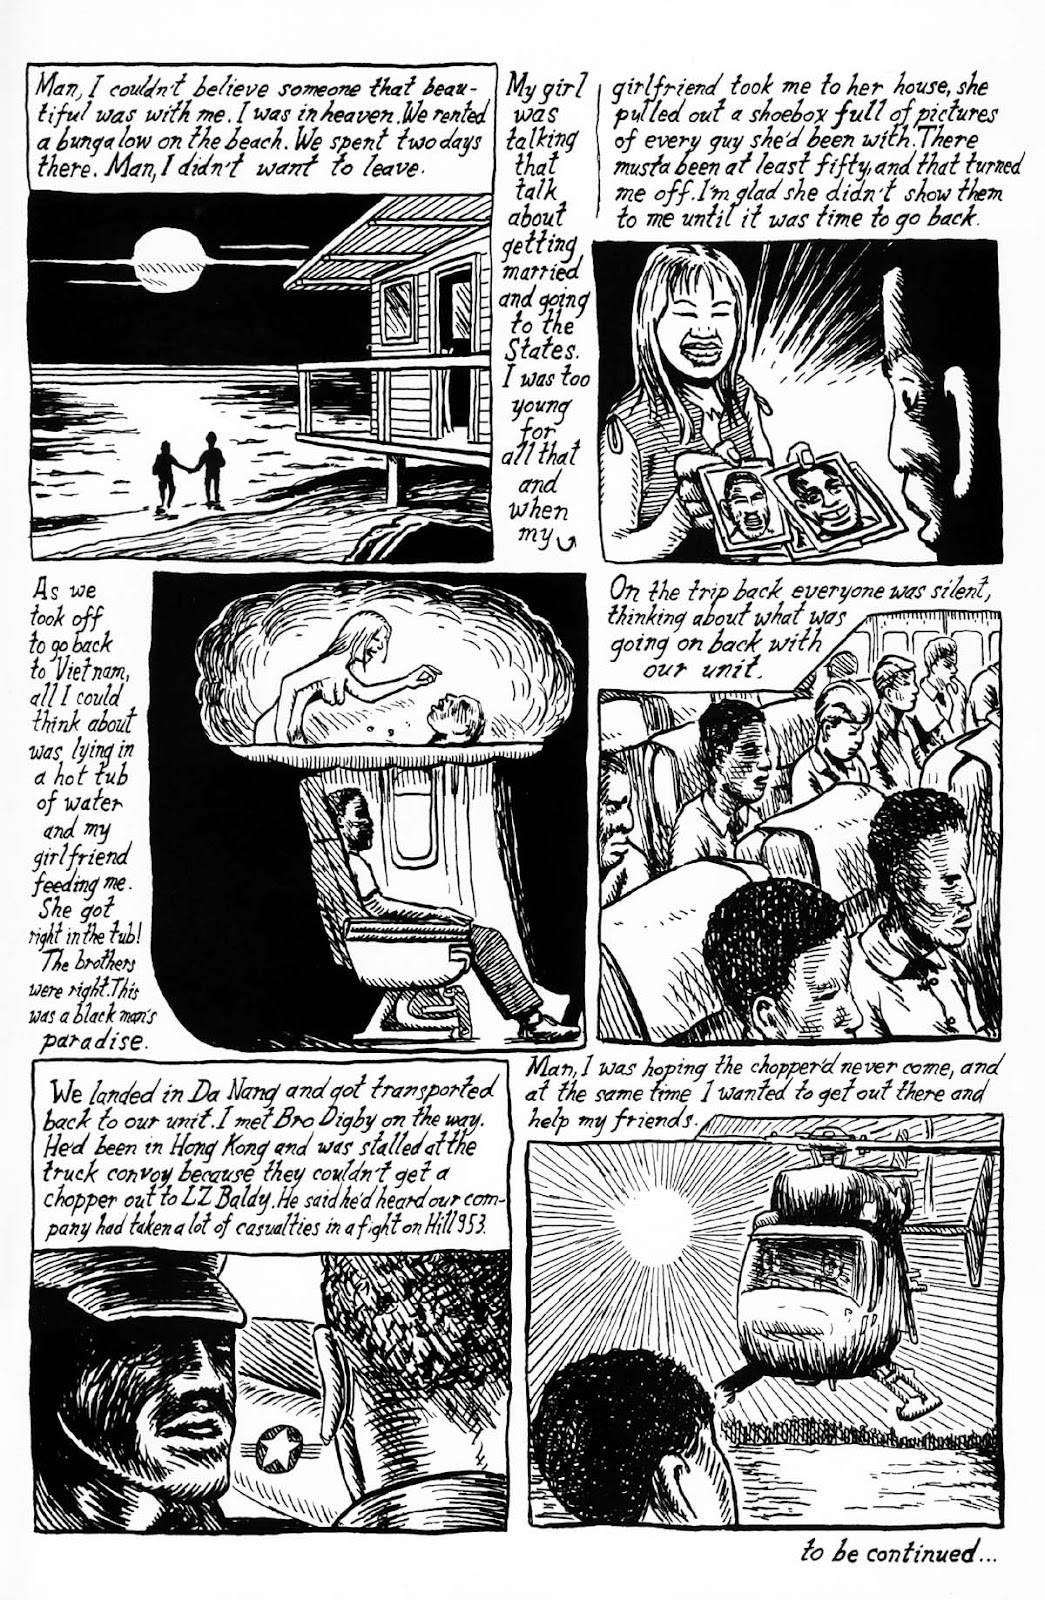 American Splendor: Unsung Hero issue 2 - Page 27